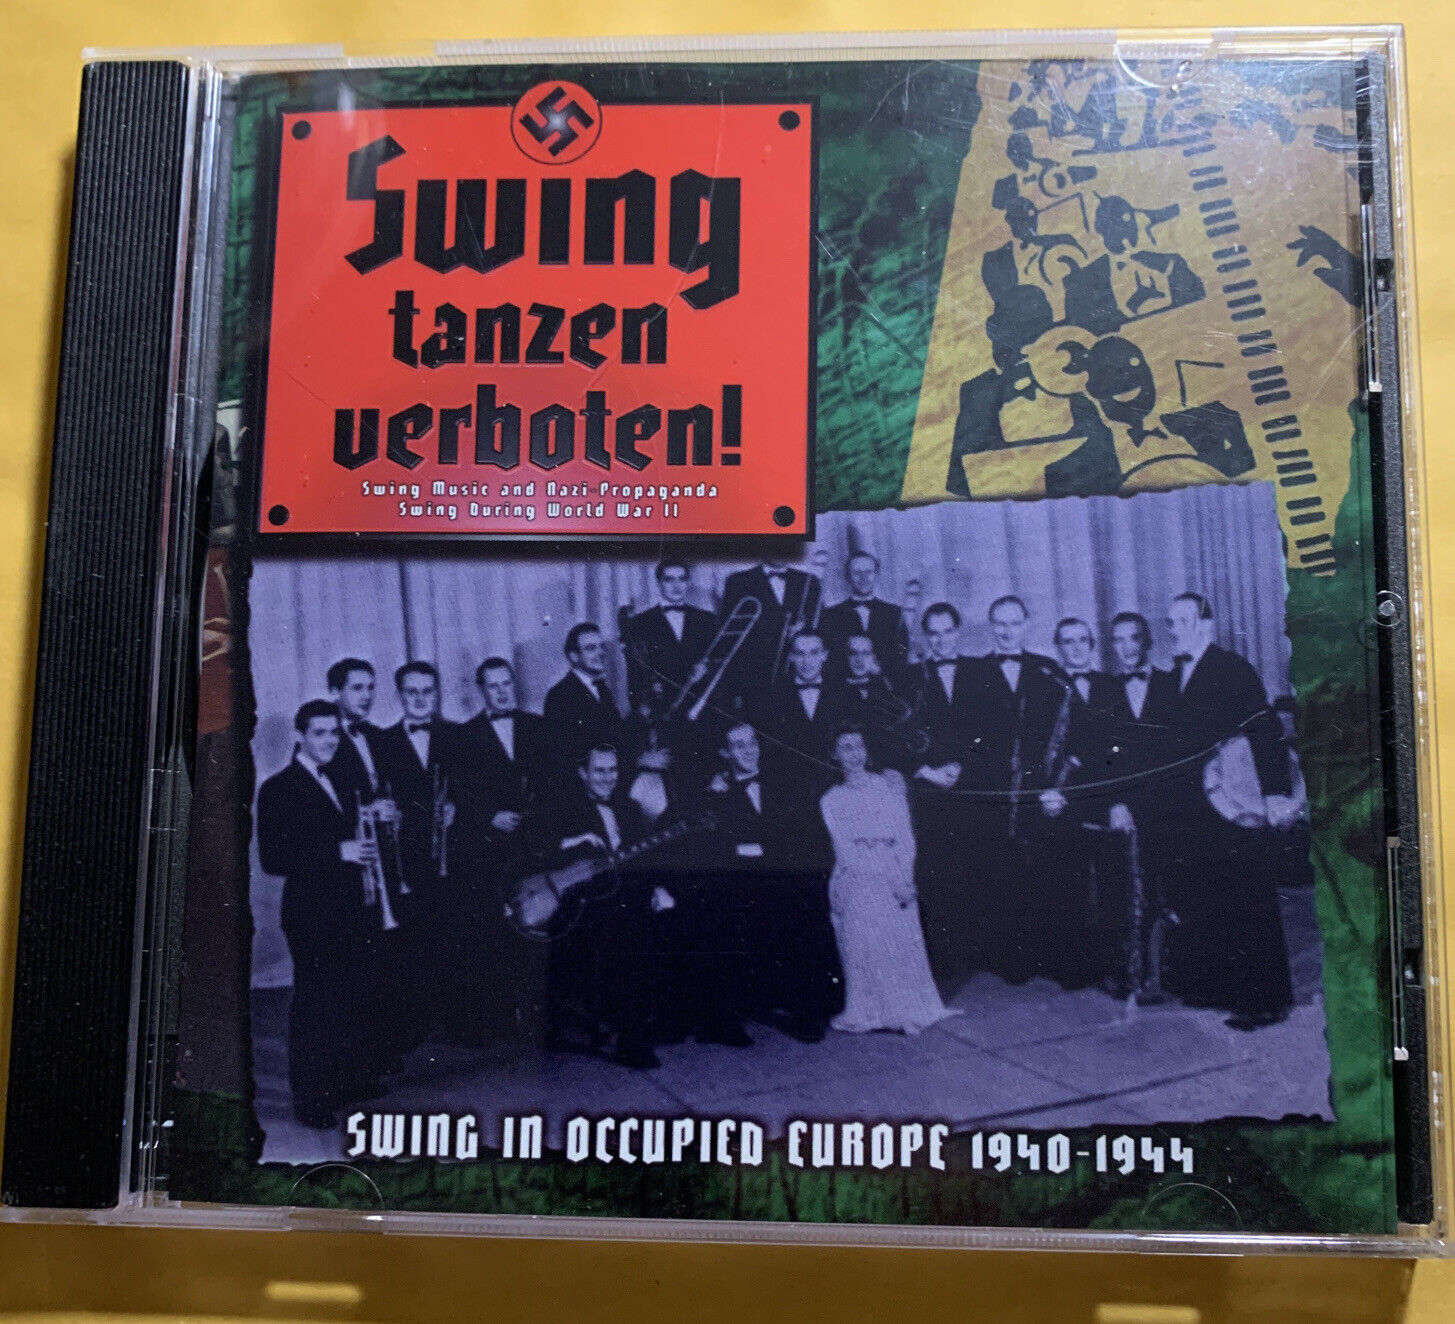 Swing tanzen verboten occupied Europe 1940-1944 CD Rare HTF World War 2